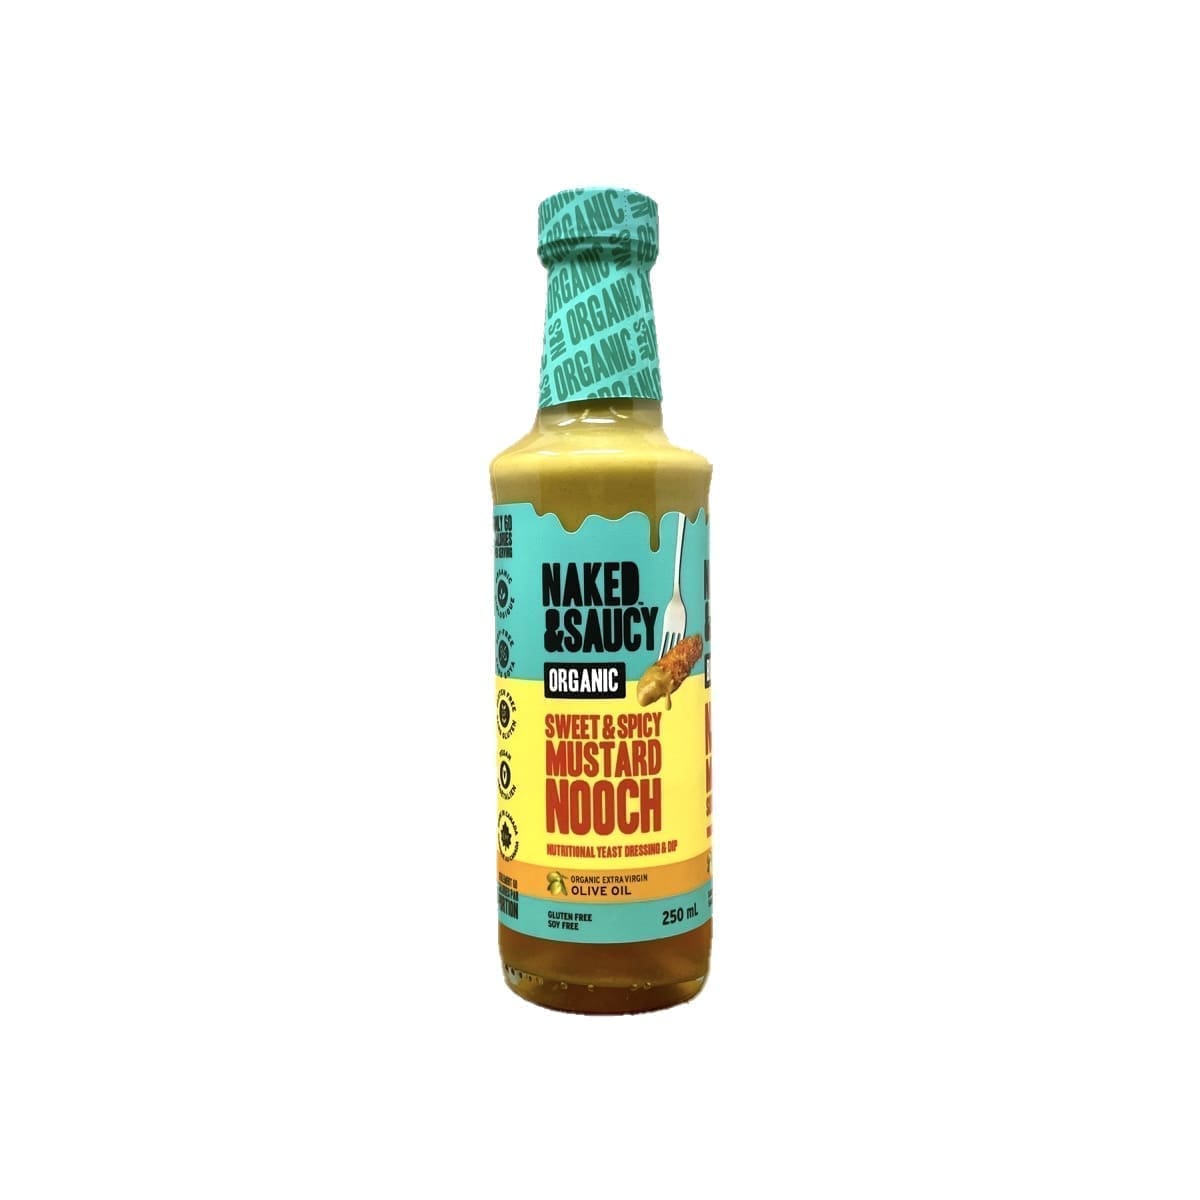 Naked & Saucy Organic Sweet & Spicy Mustard Nooch (250mL)